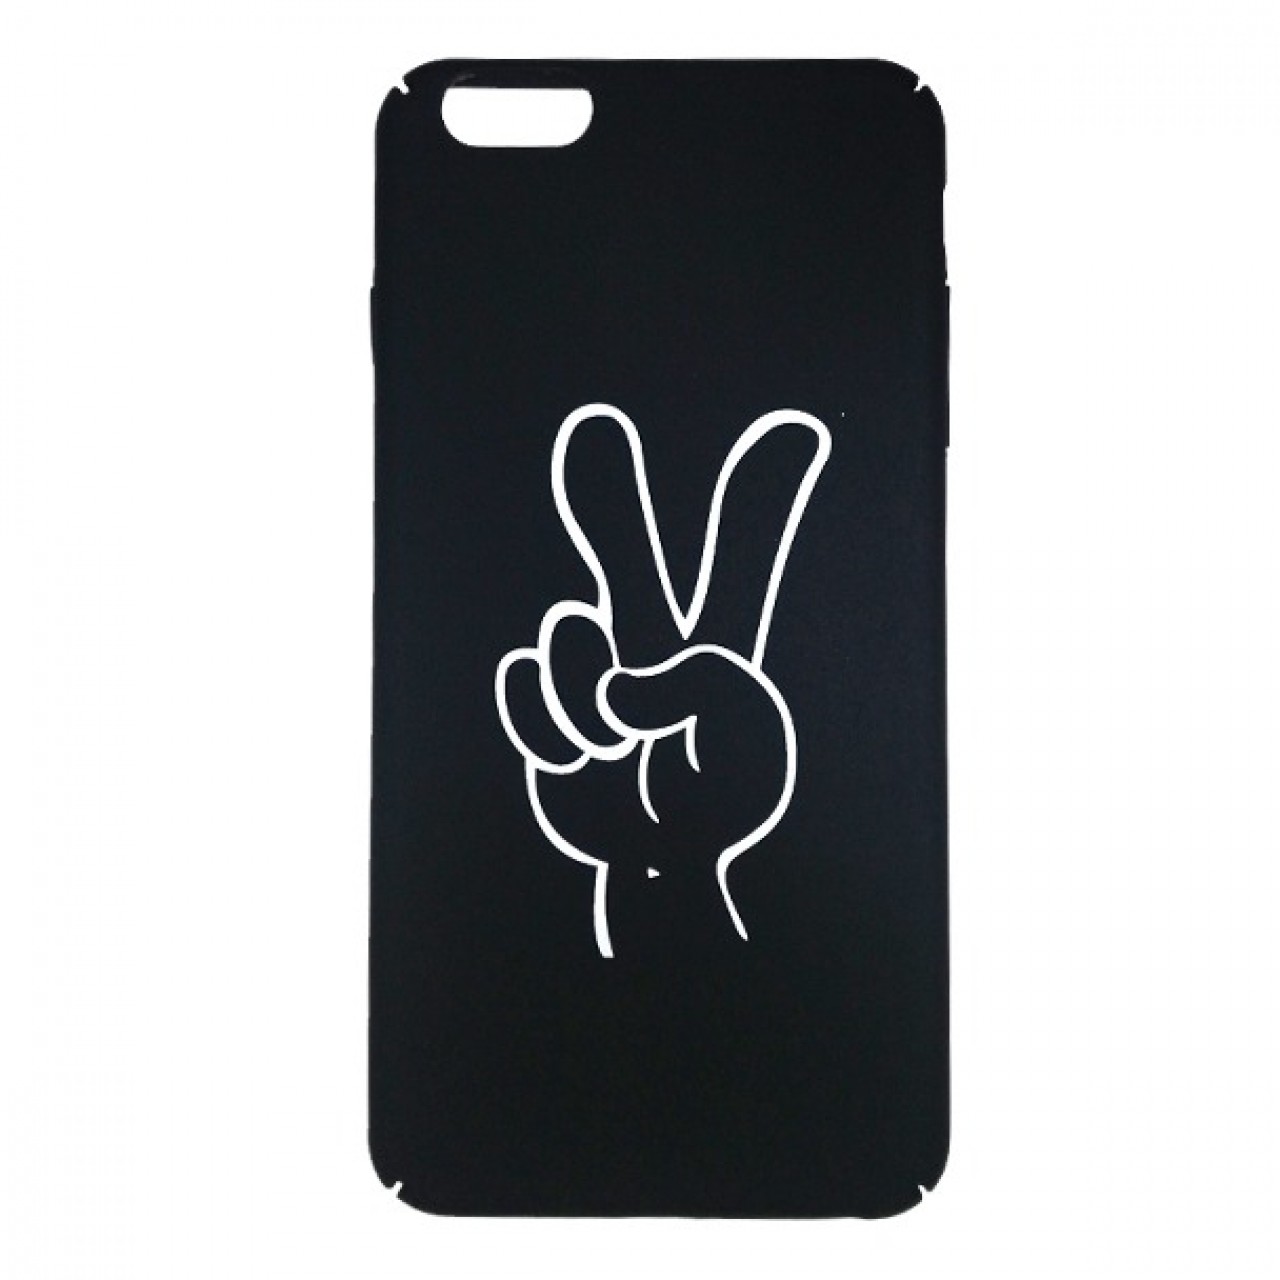 iPhone 6 Plus Victory Logo Hard Case - Black